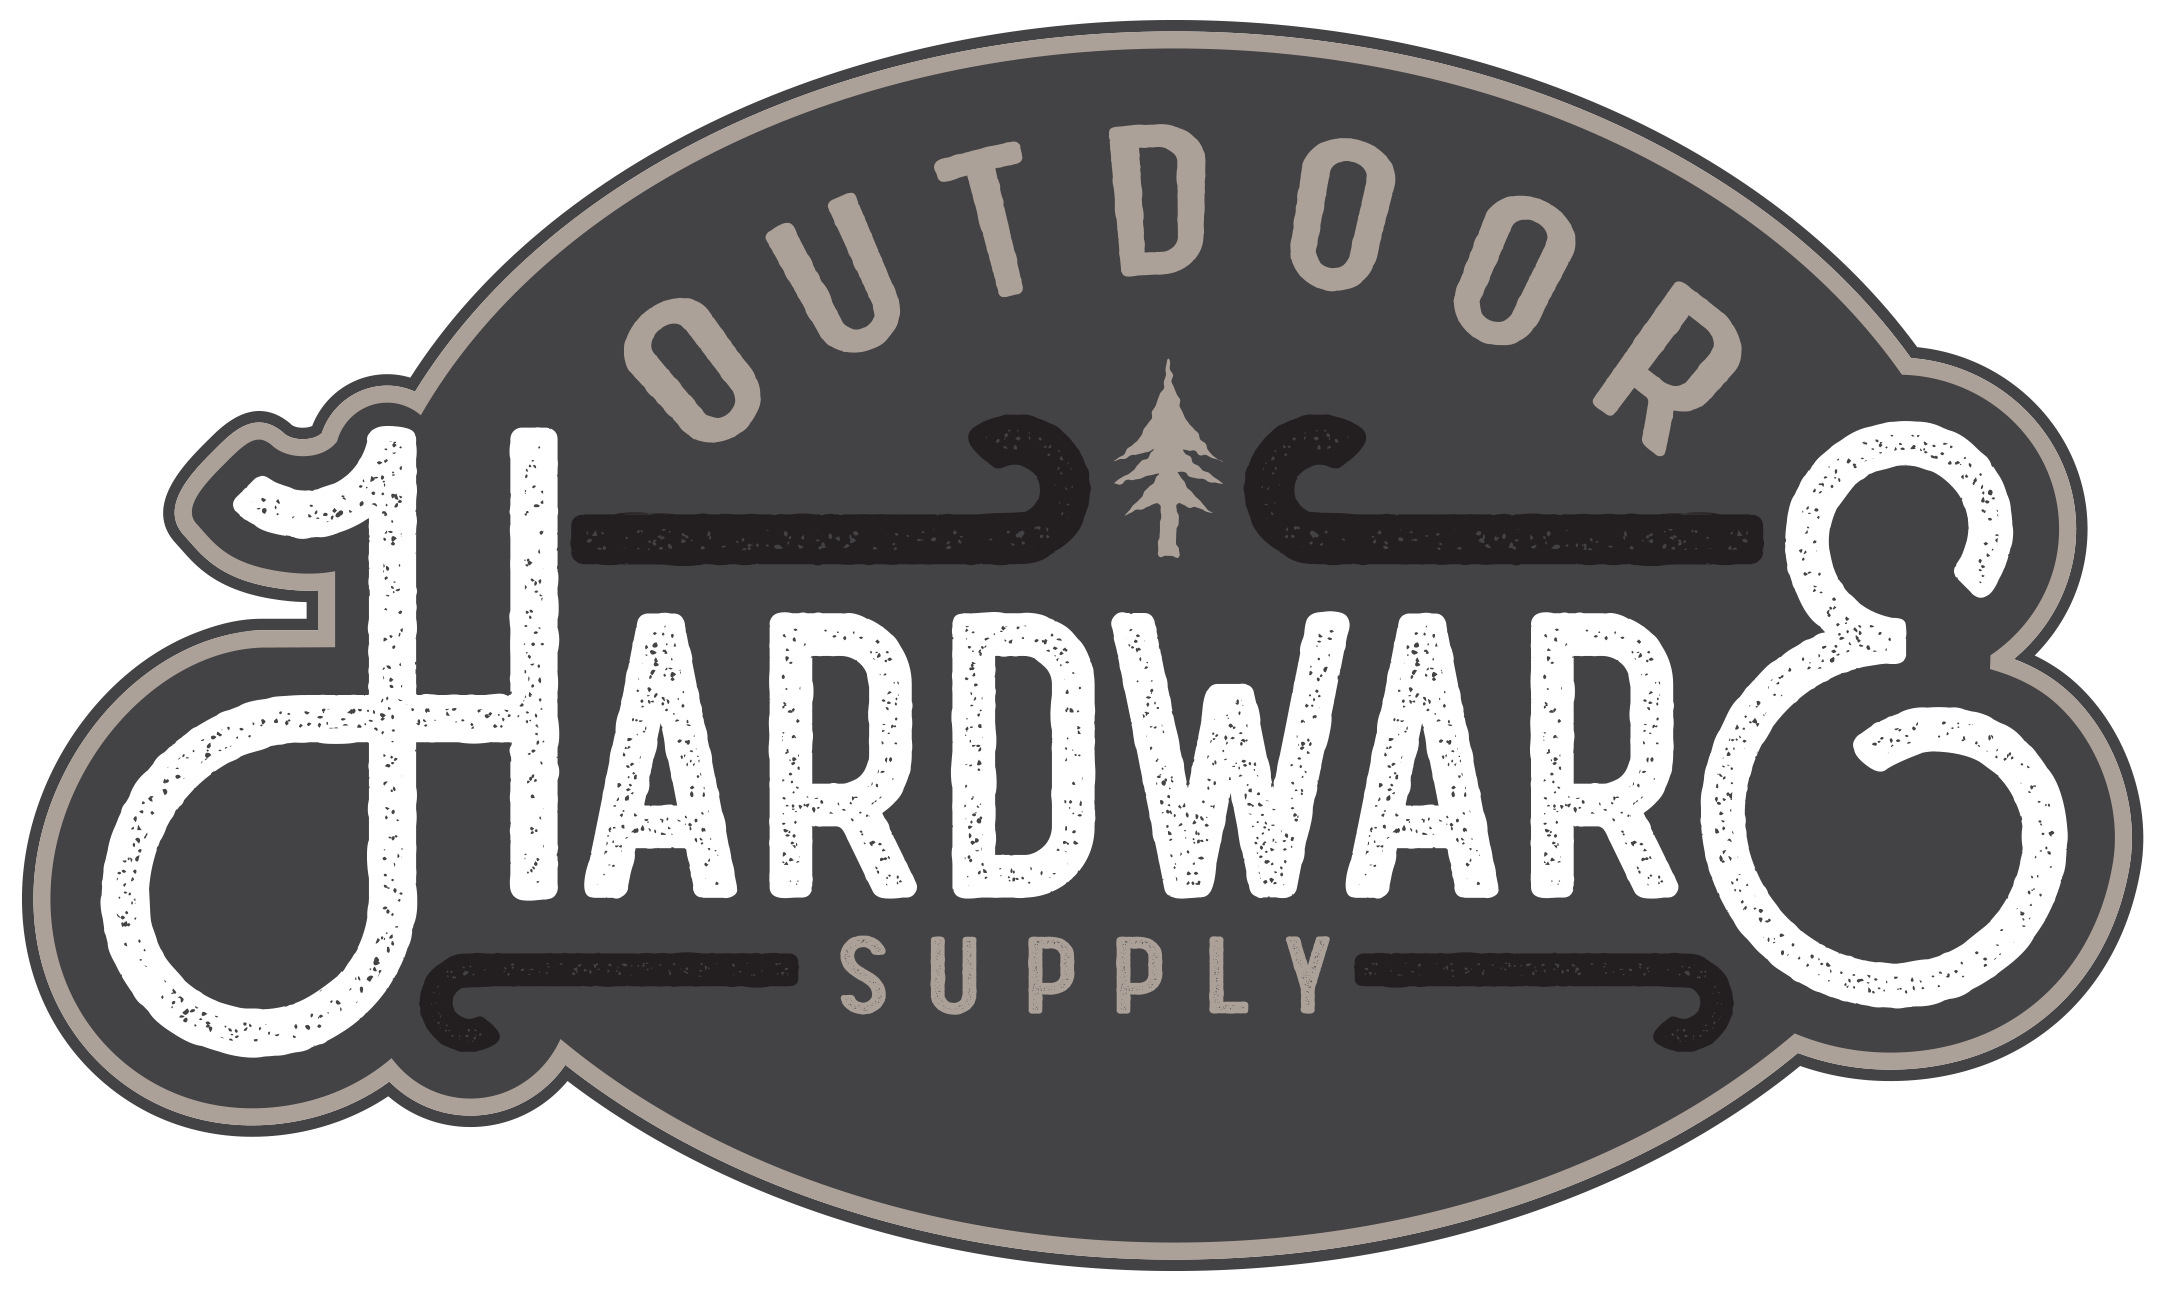 Outdoor Hardware Supply